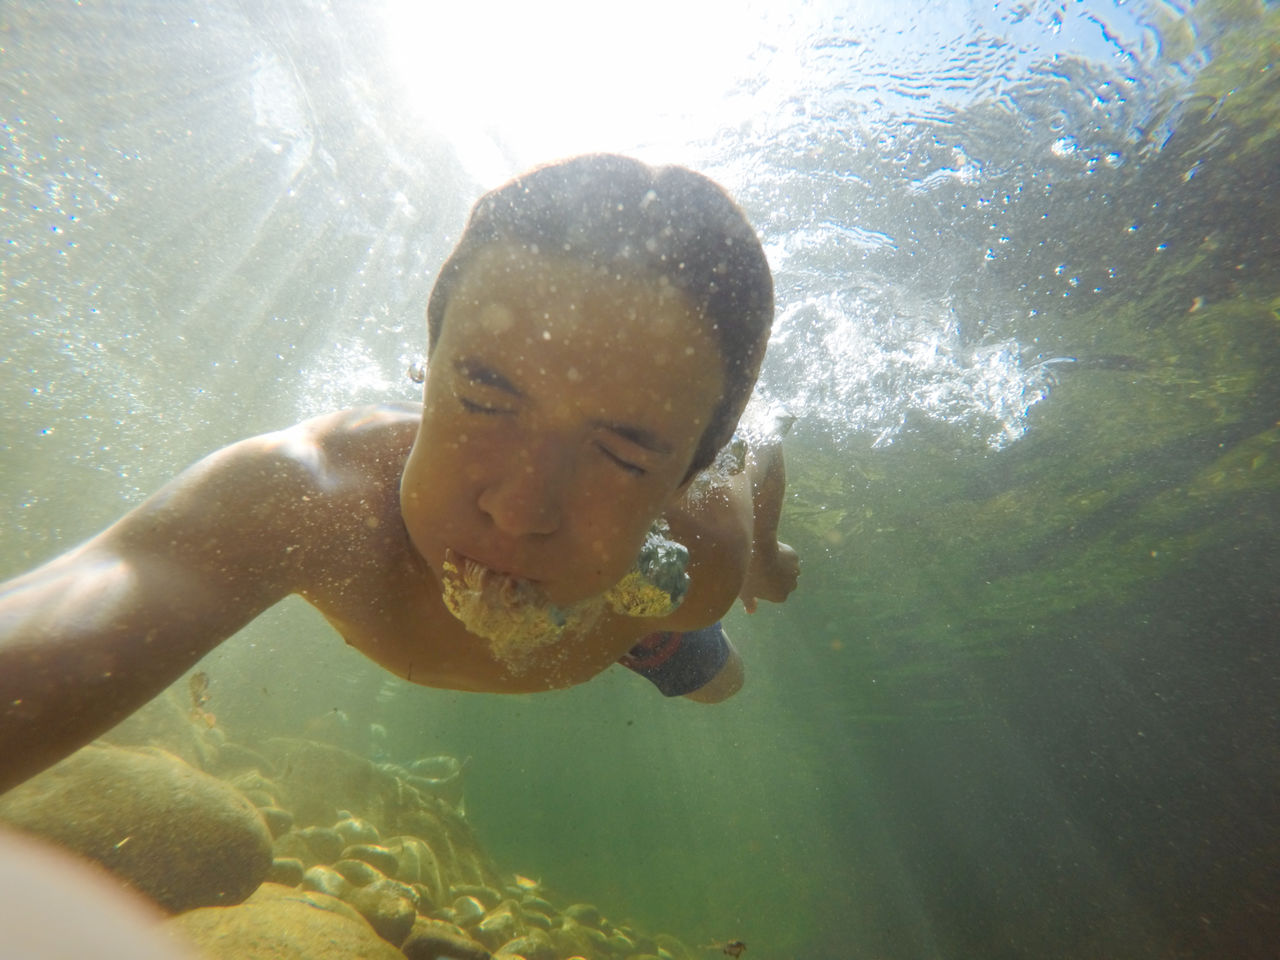 Teenage boy swimming underwater